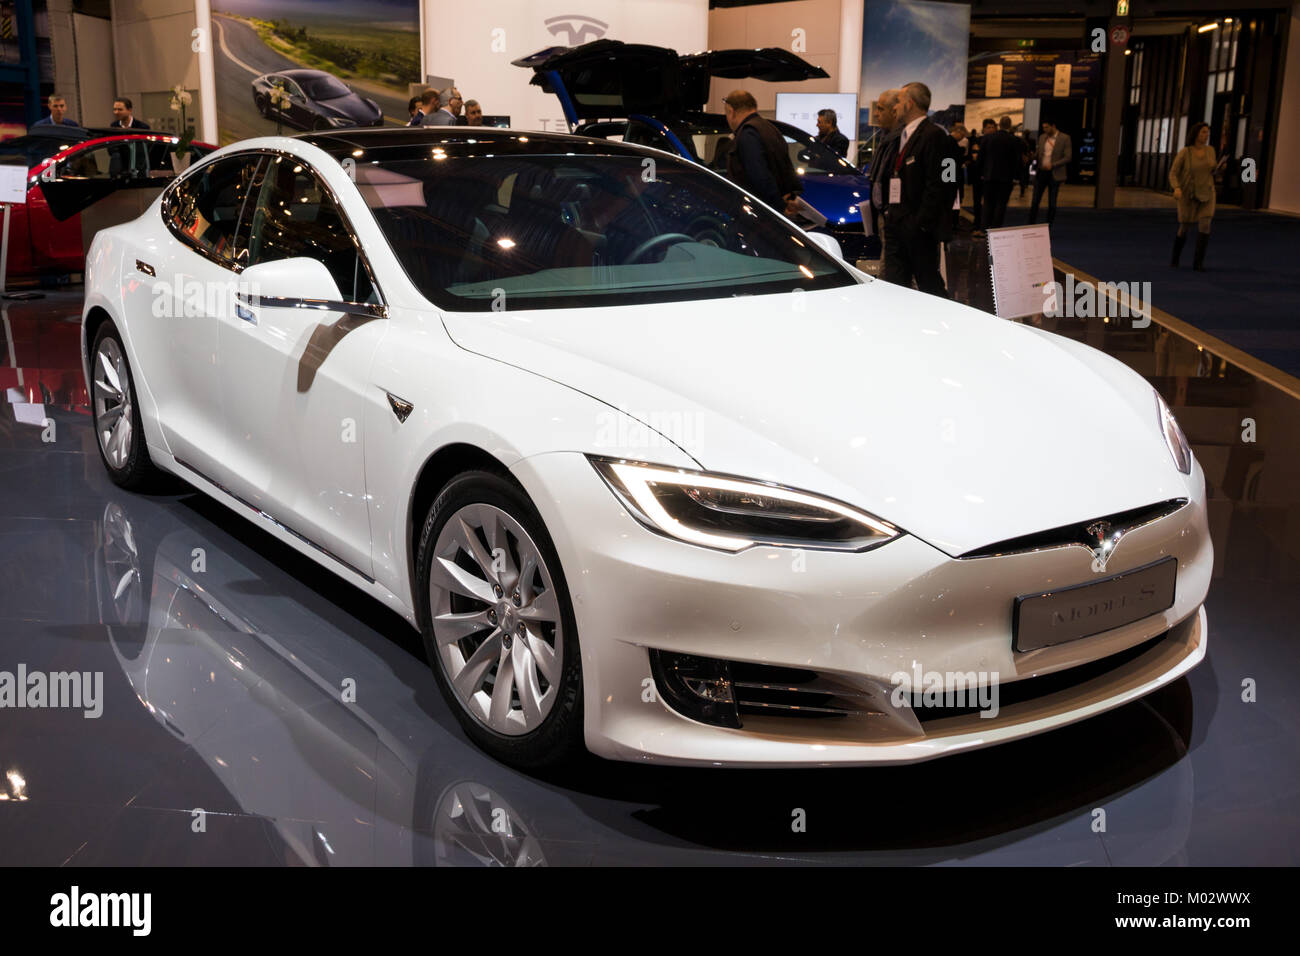 Bruxelles - Jan 10, 2018: Tesla Model S auto elettriche presentate al Bruxelles Motor Show. Foto Stock